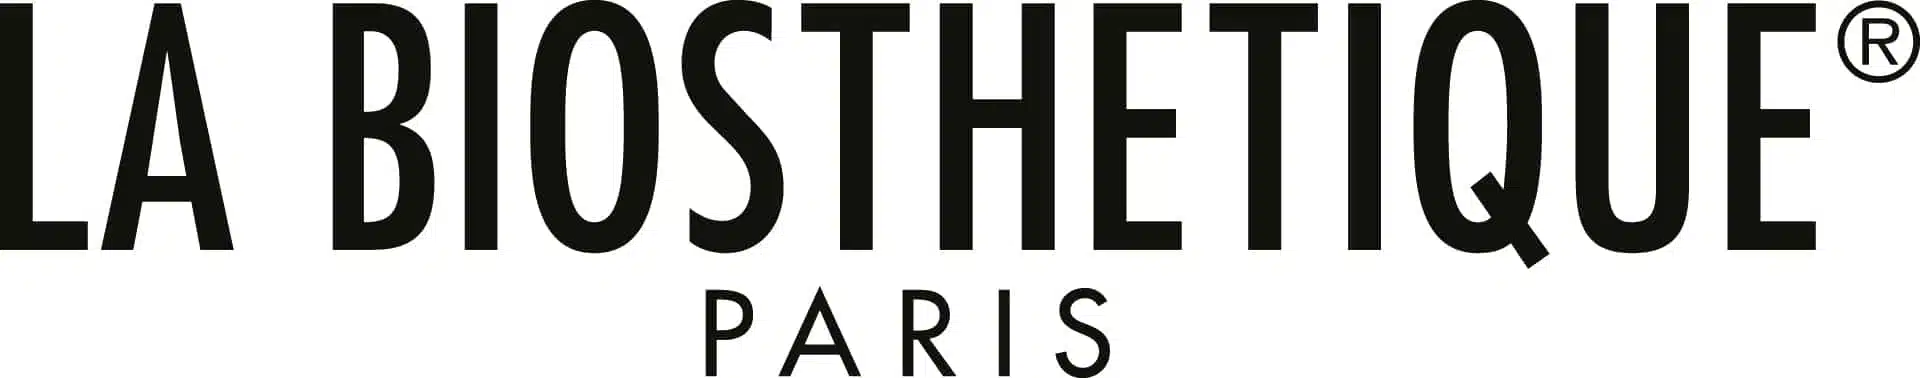 La Biosthetique logo